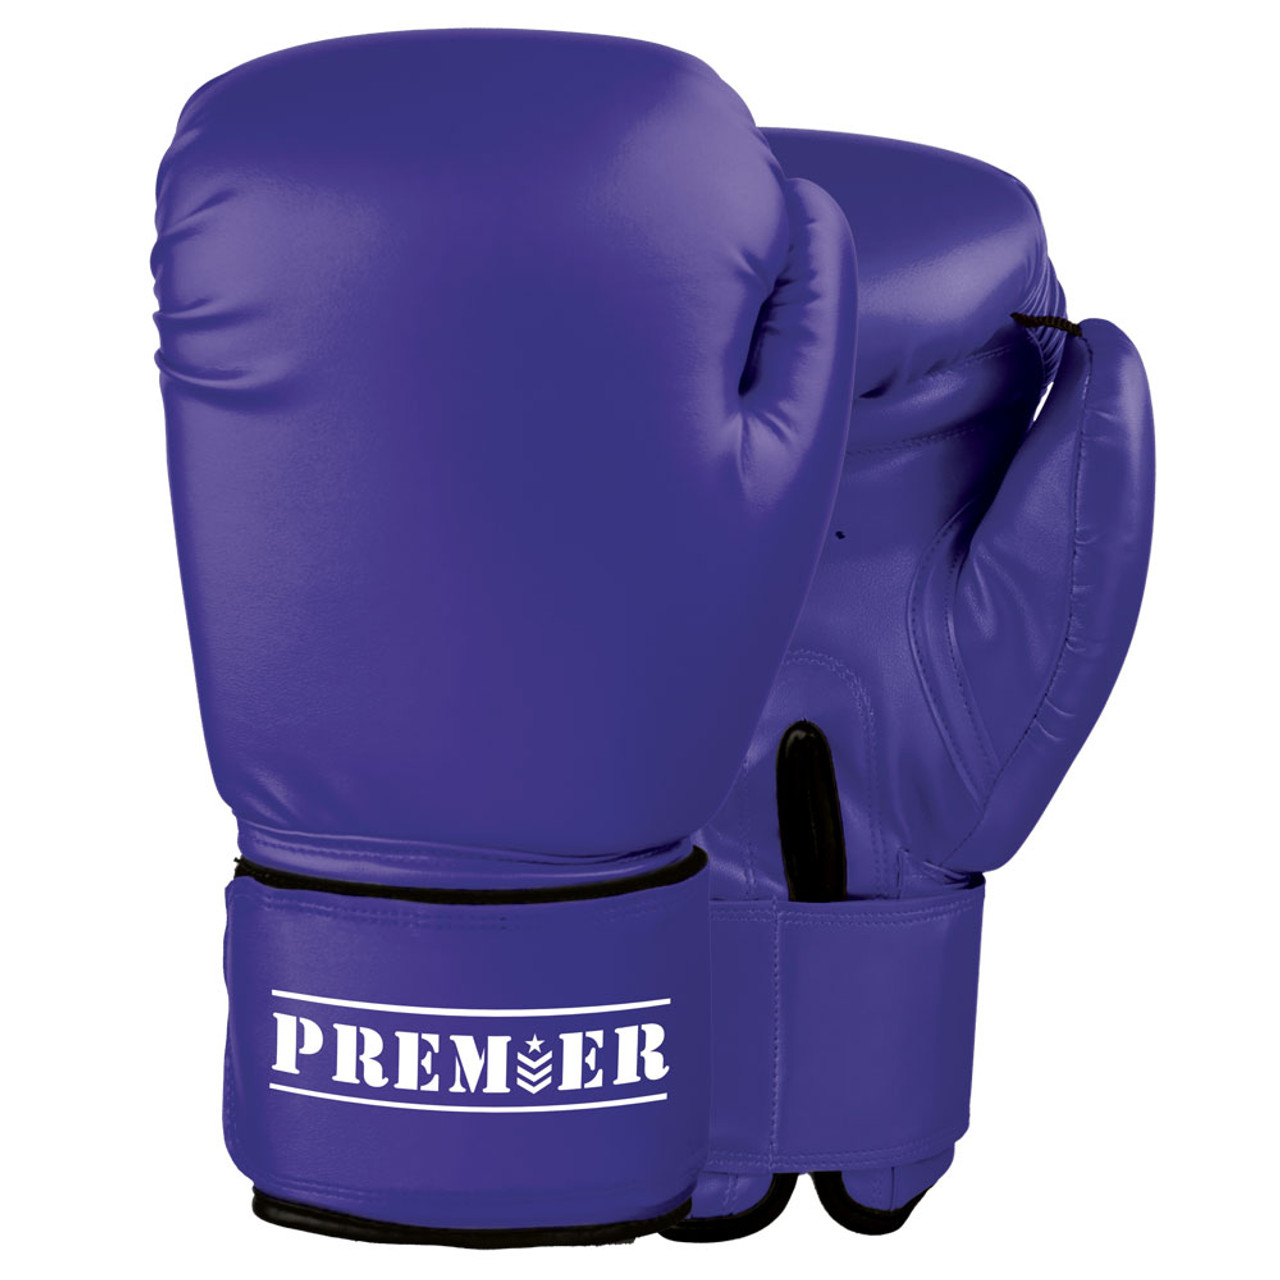 Premier Boxing Gloves Buy Training Gloves at Revgear